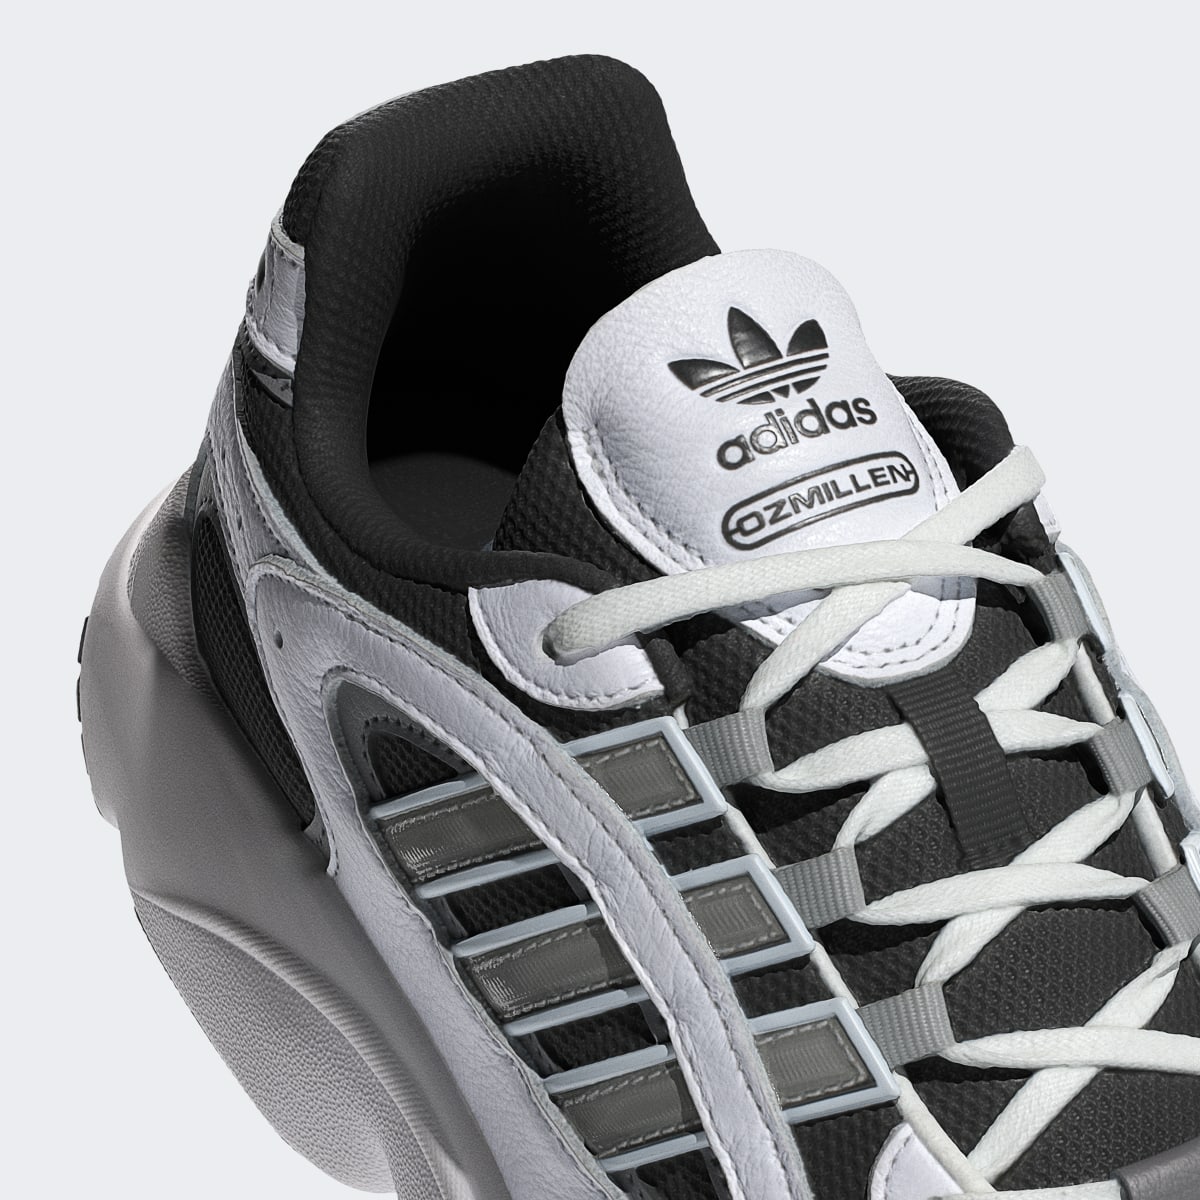 Adidas Scarpe OZMILLEN. 10